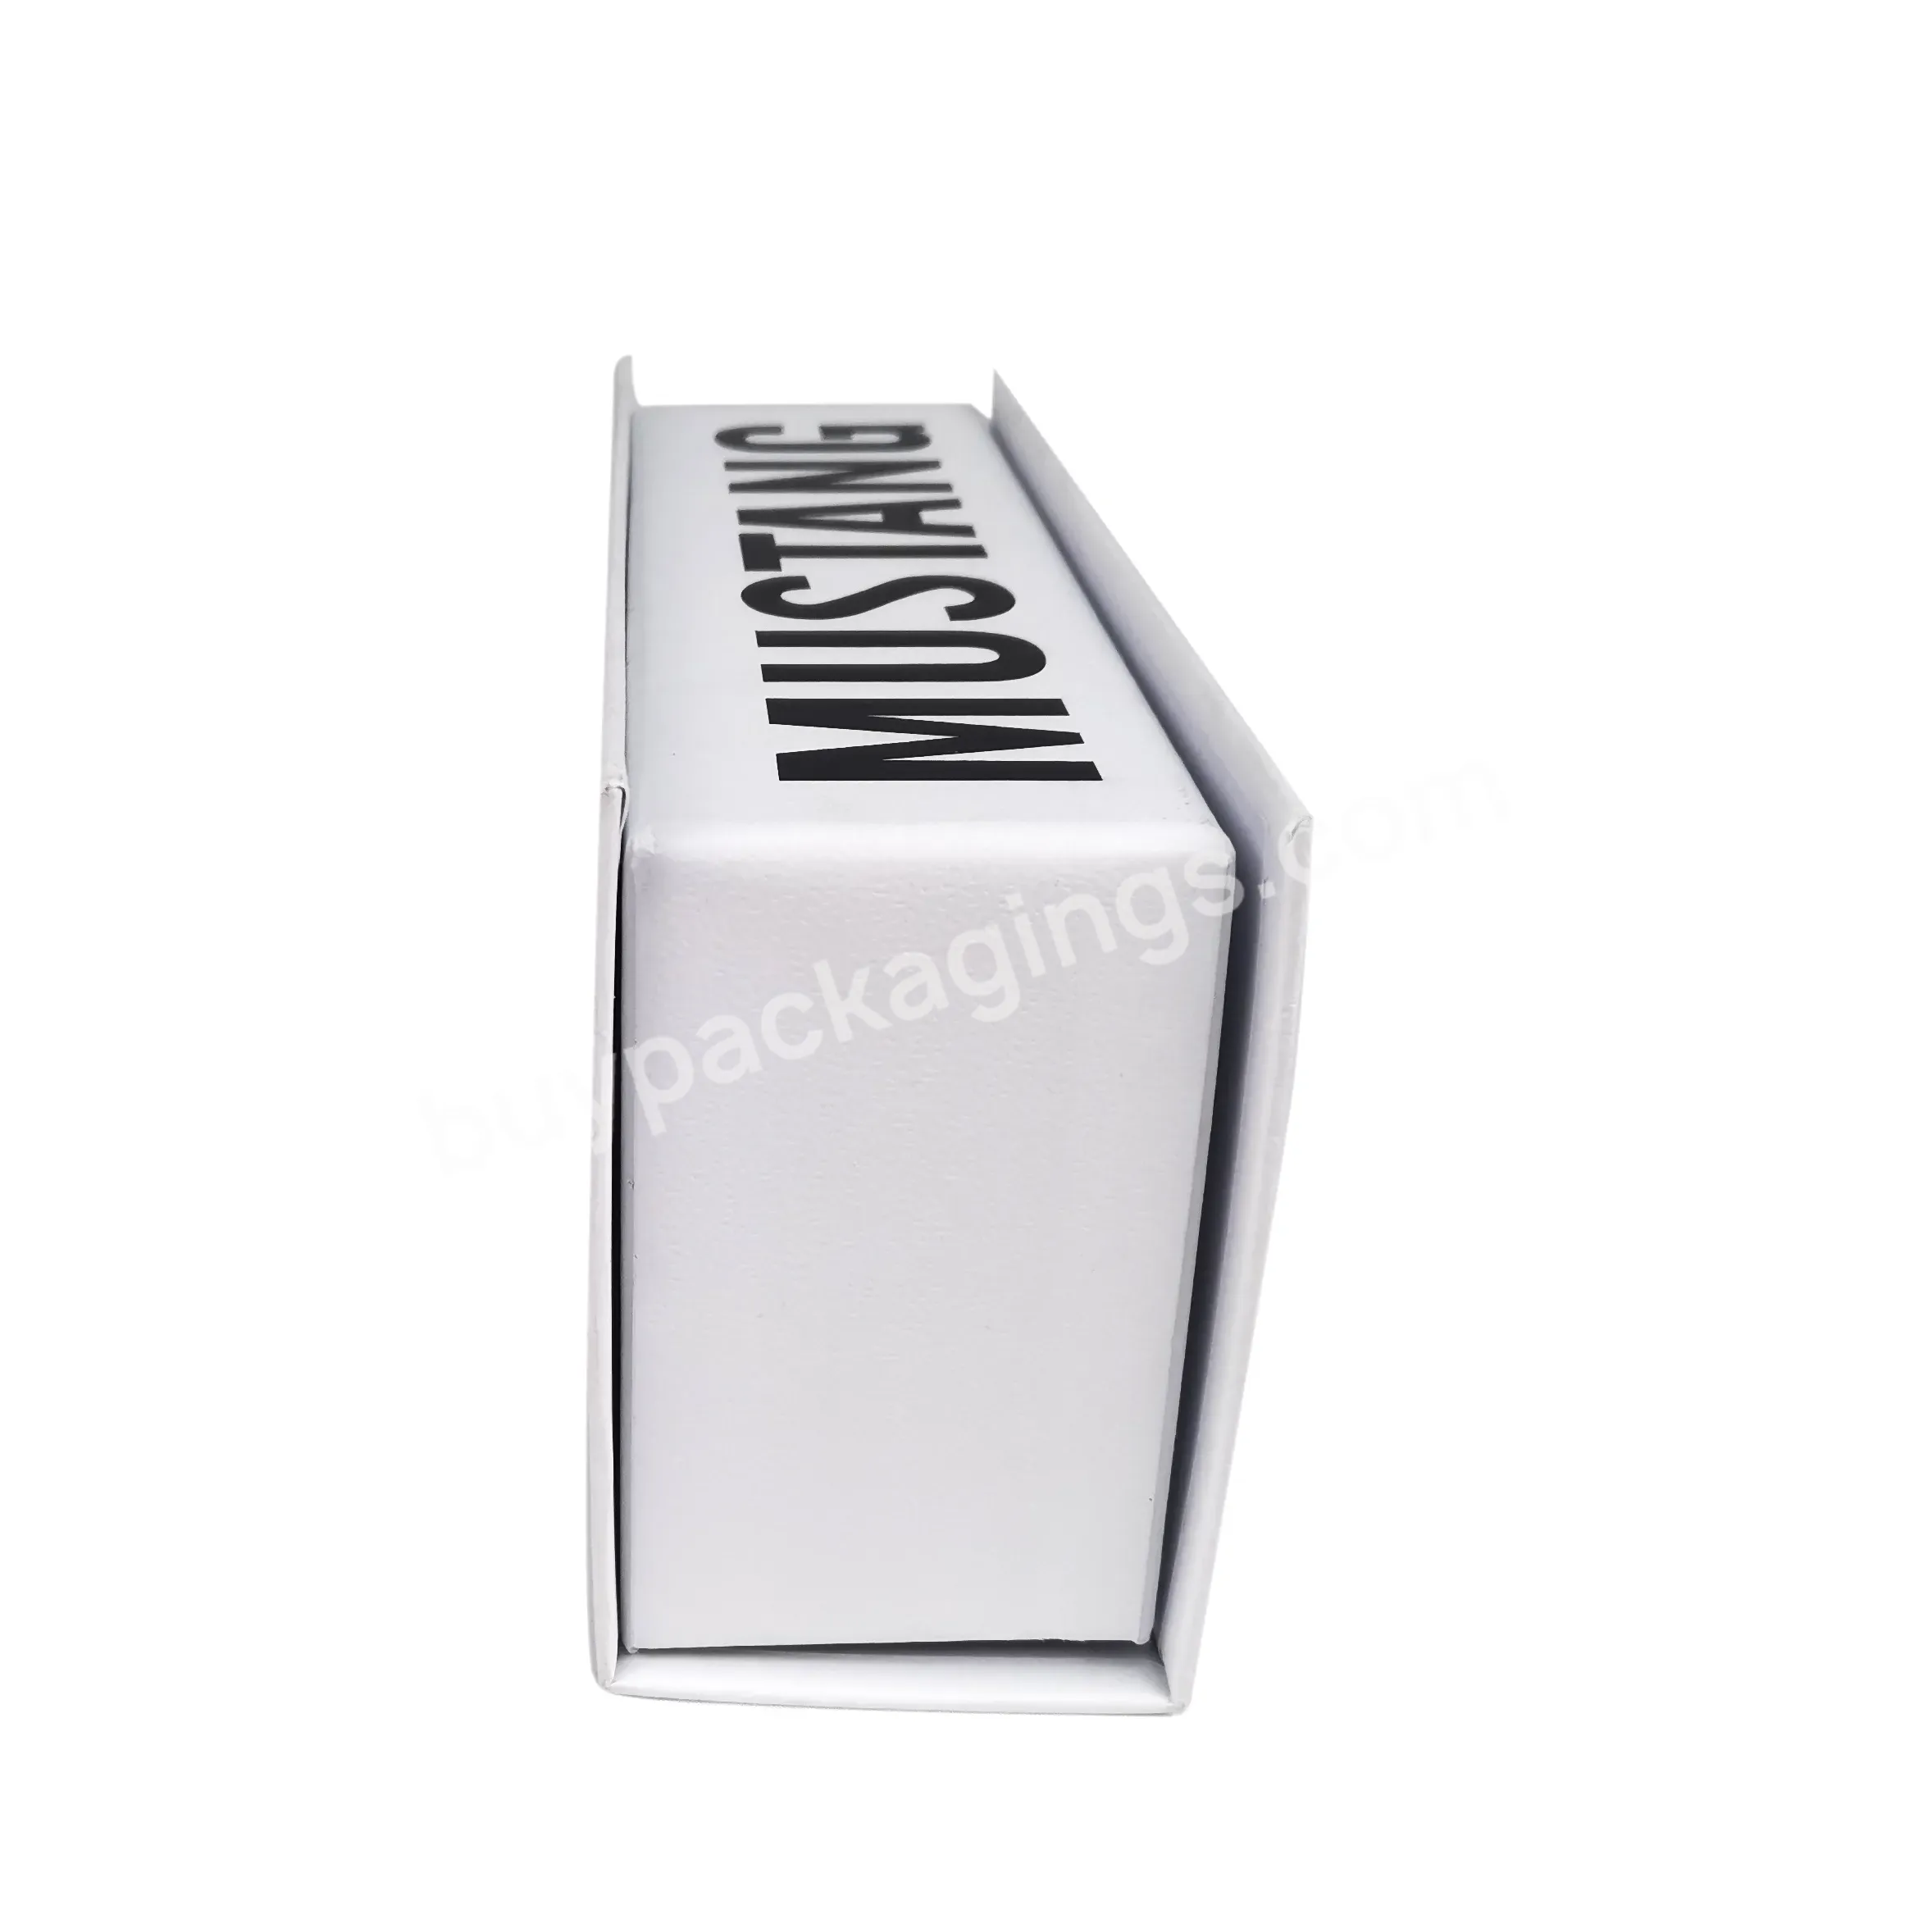 Custom White Lid And Base Paper Cardboard Jewelry Box Packaging - Buy White Rigid Gift Cardboard Jewelry Box,White Rigid Gift Jewelry Box Packaging,White Lid And Base Jewellery Packaging Box.